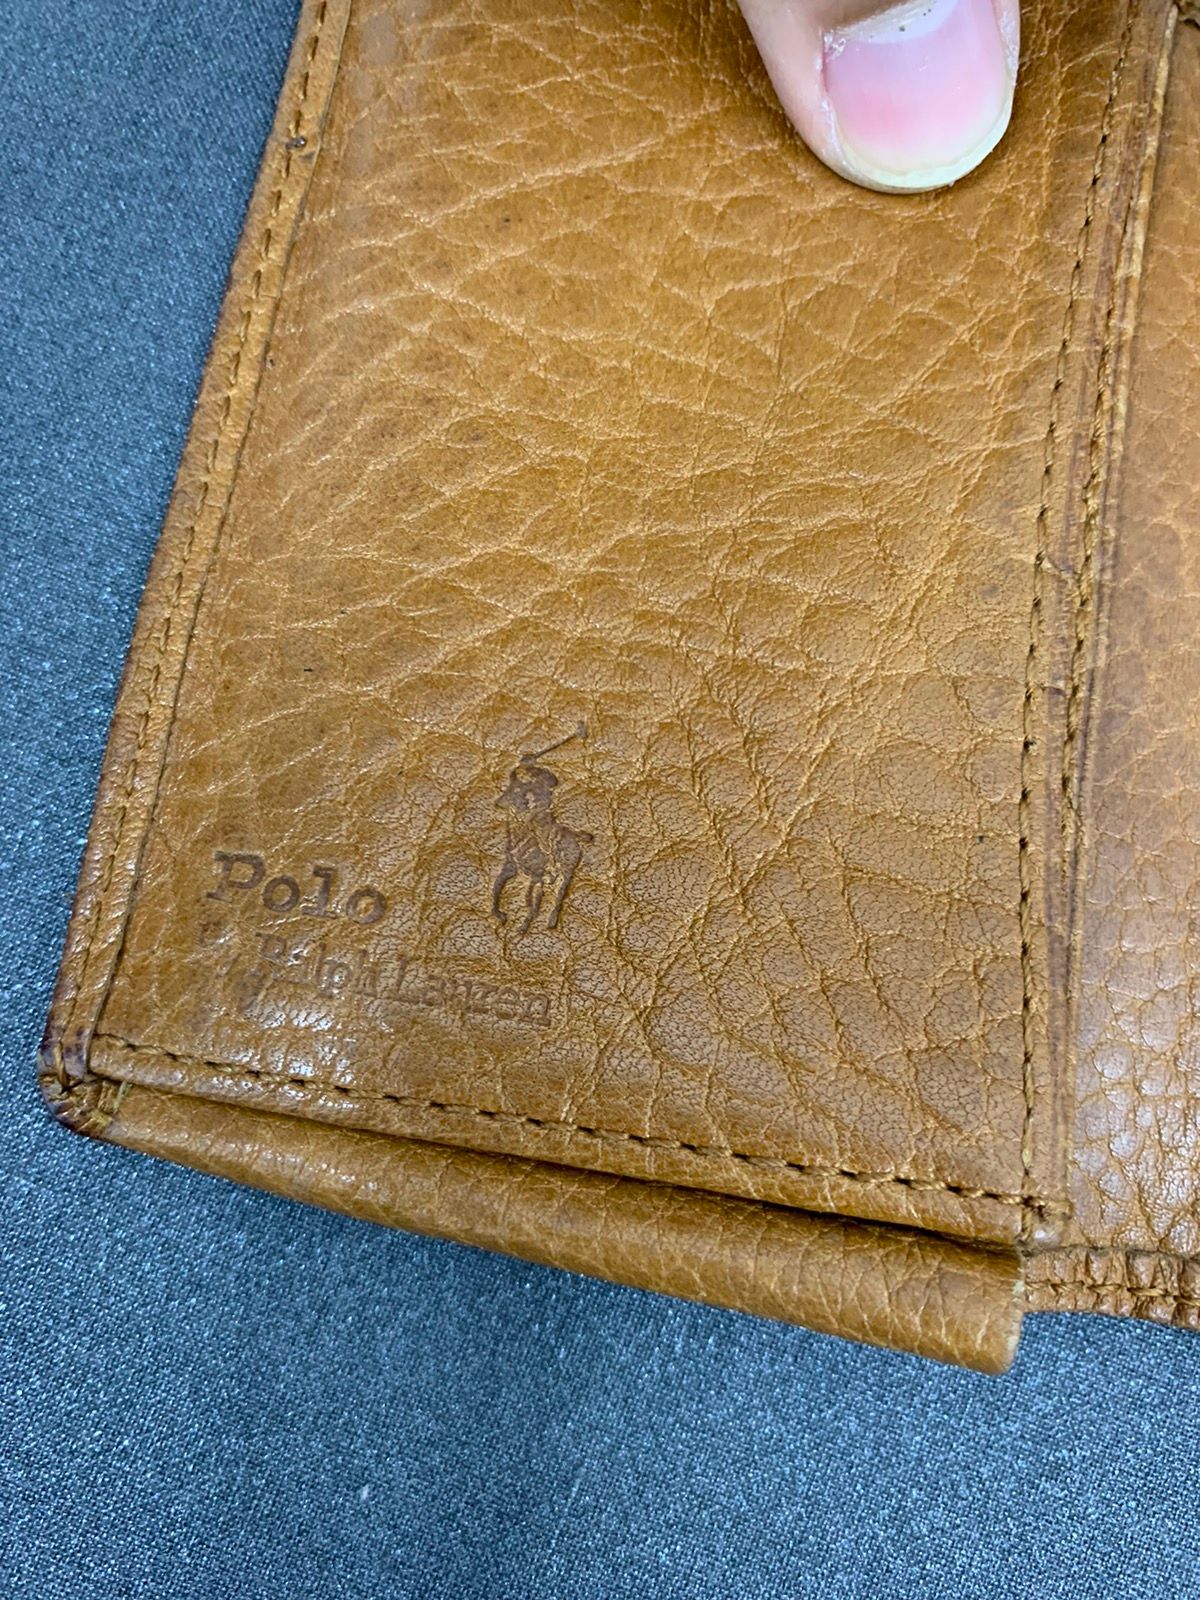 Vintage Polo Ralph Lauren Leather Card holder Wallet - 3